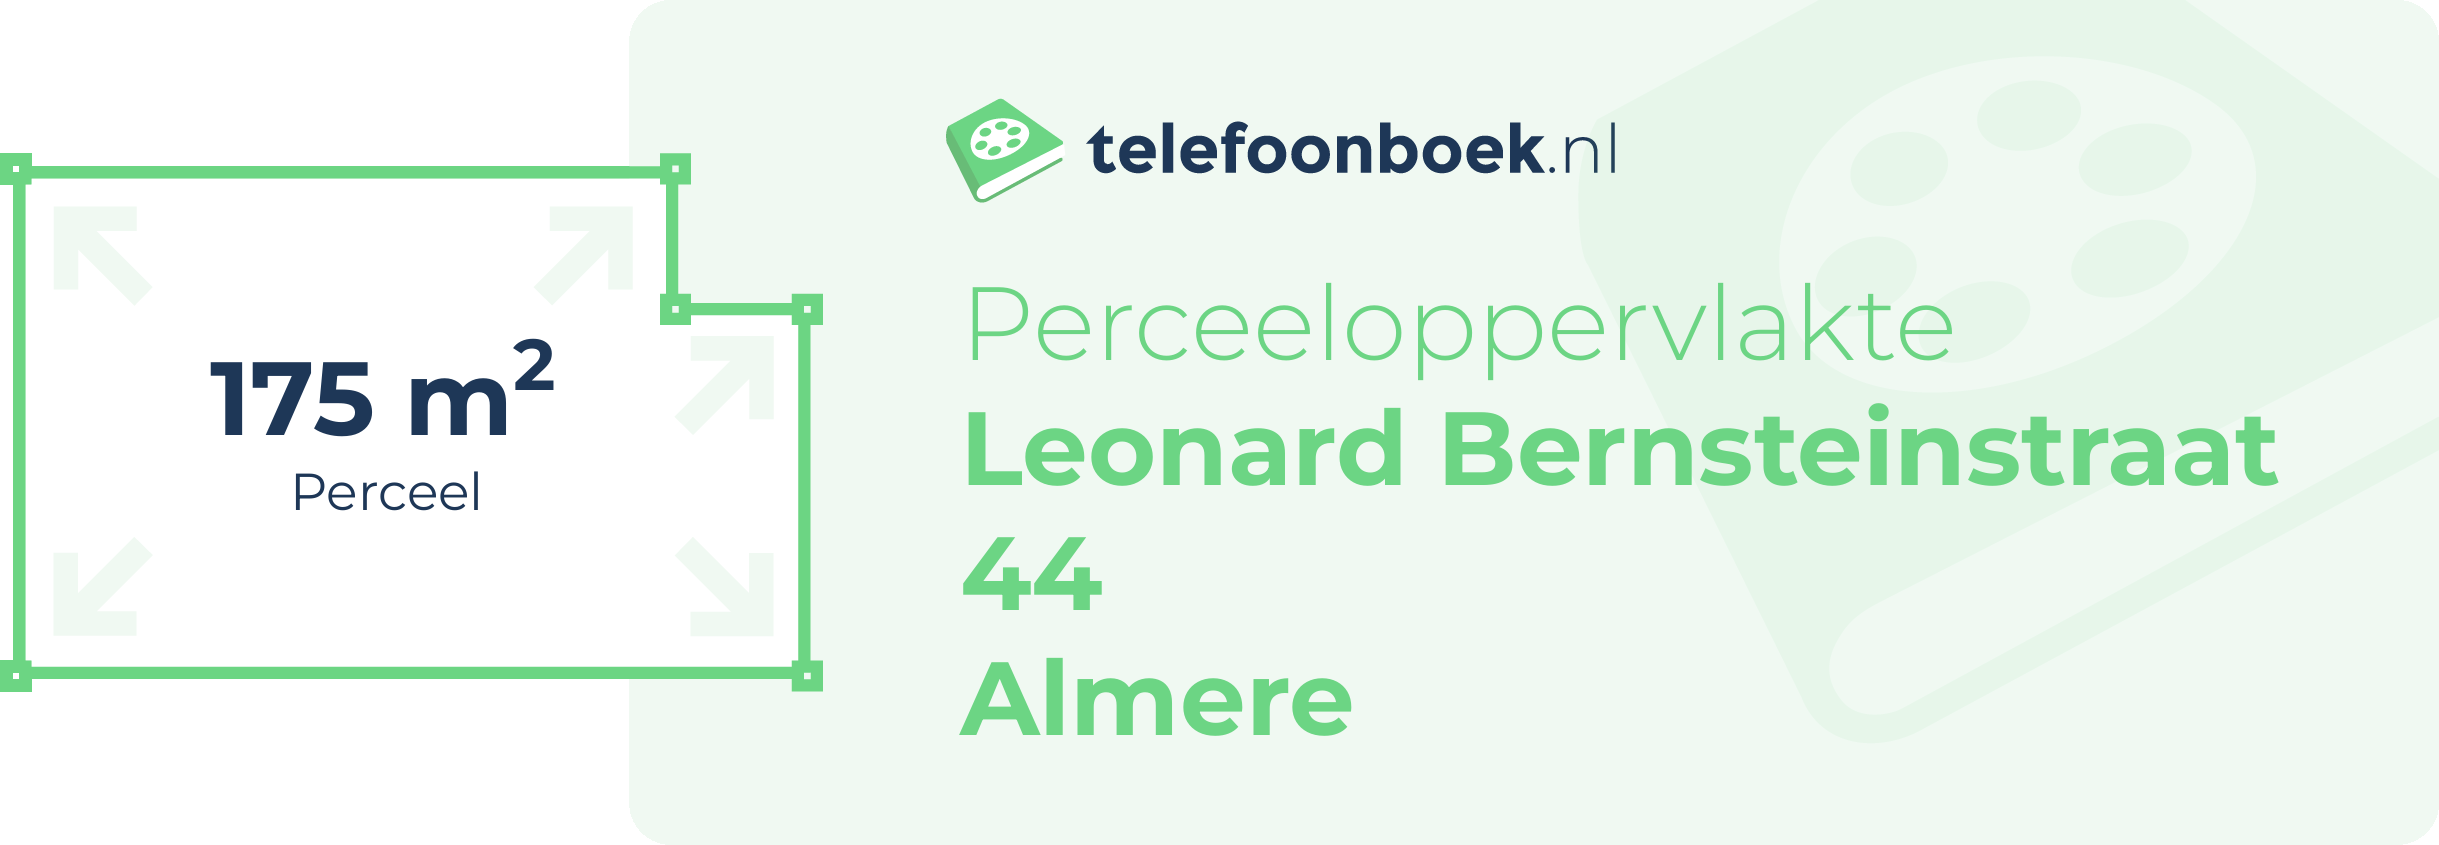 Perceeloppervlakte Leonard Bernsteinstraat 44 Almere